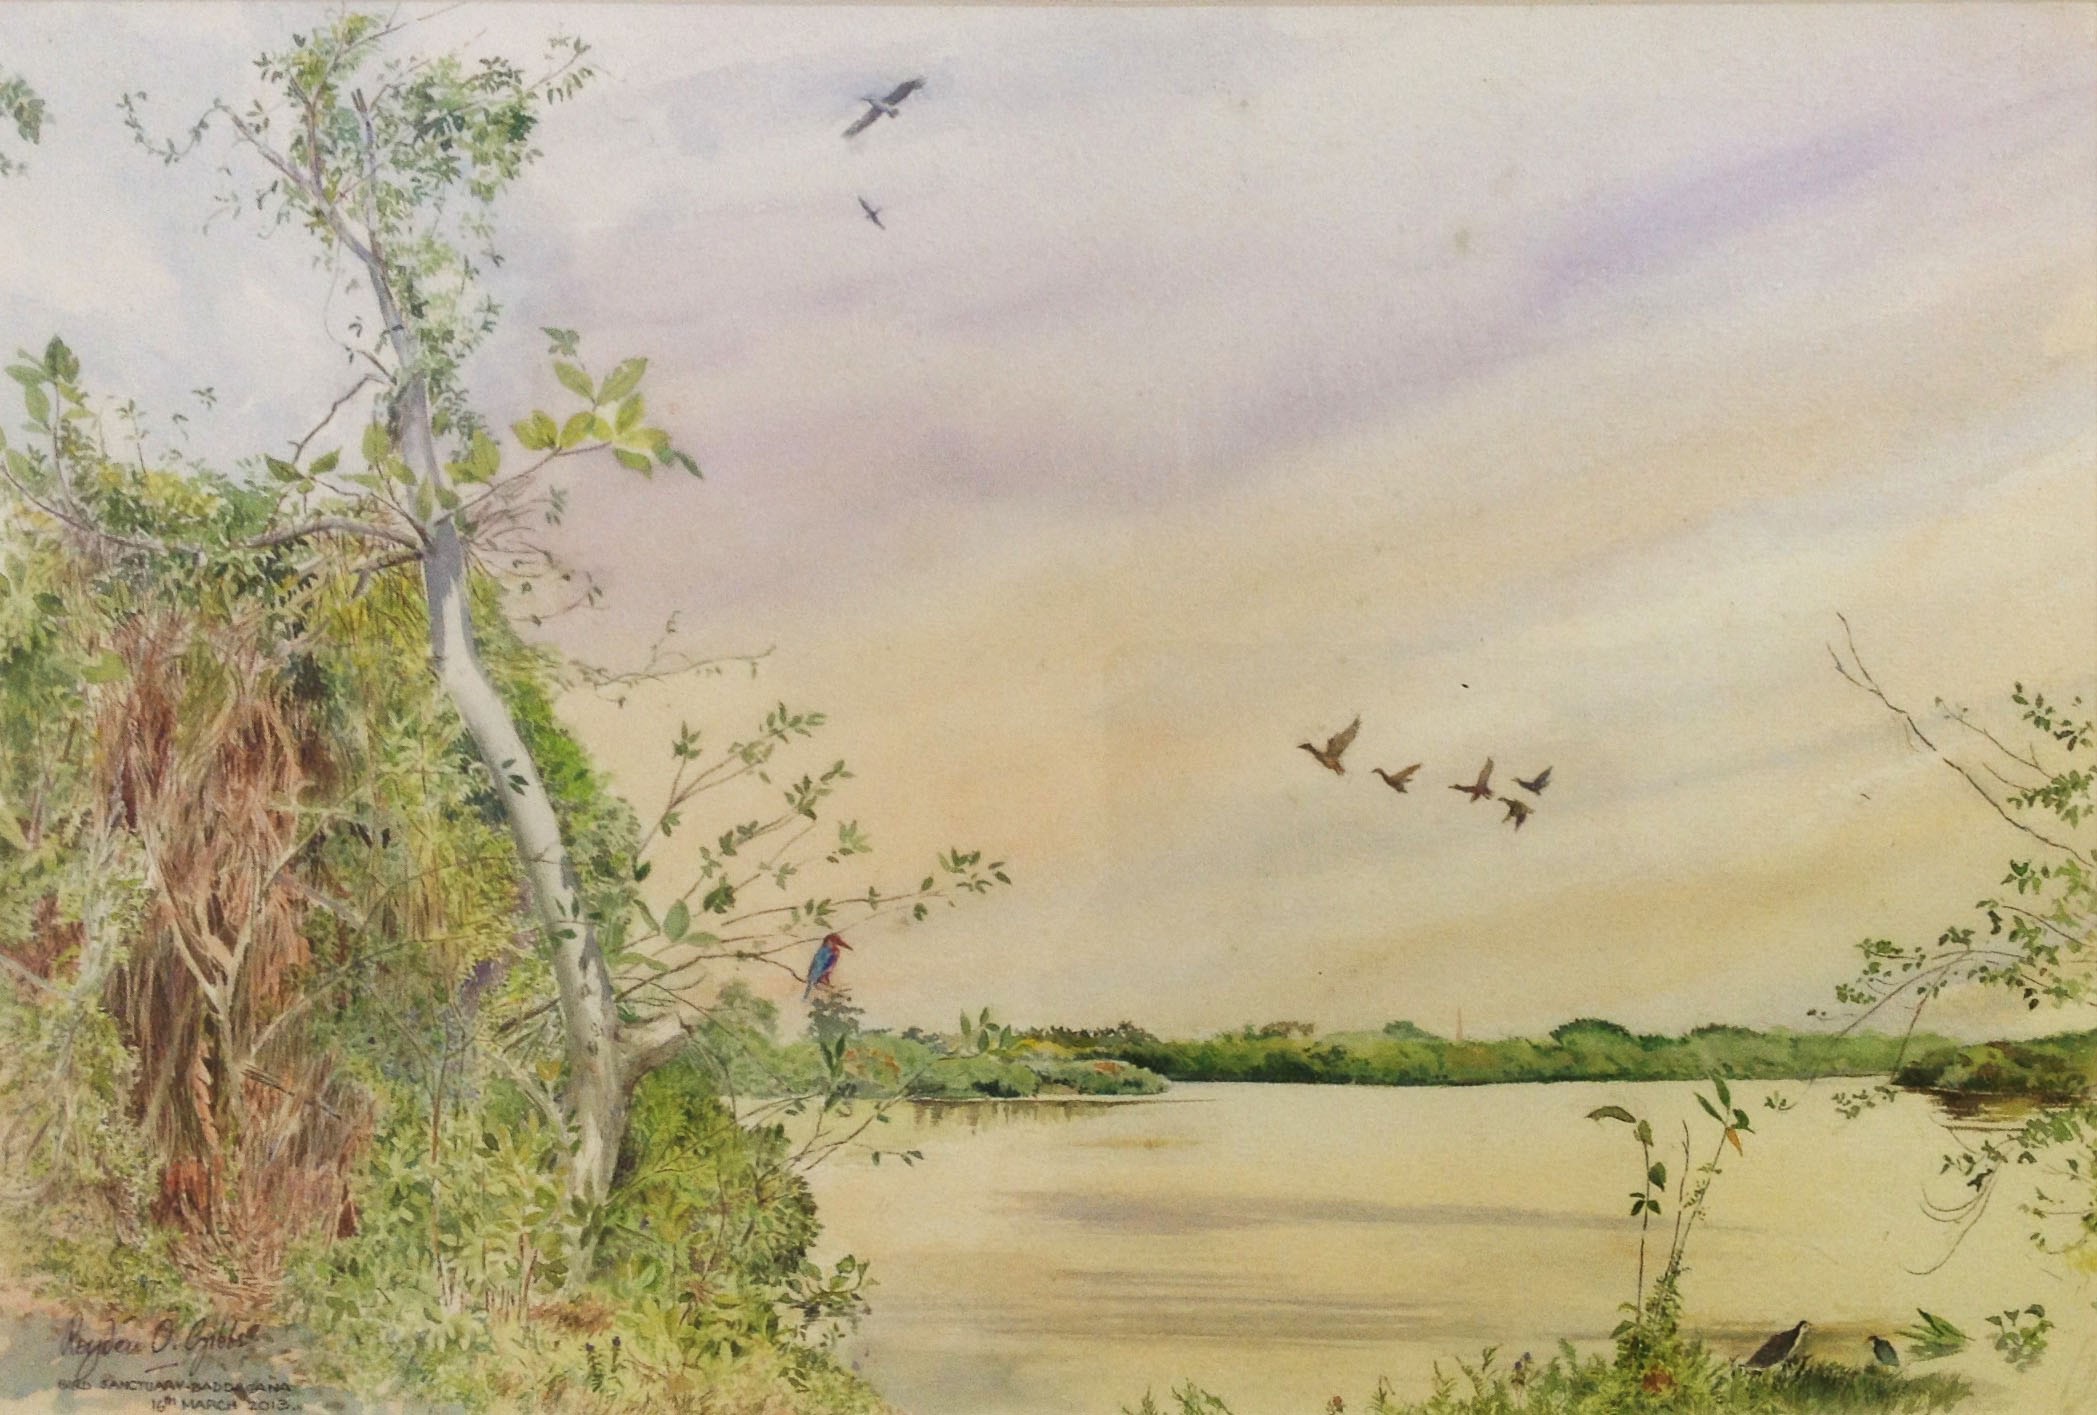 Bird Sactuary - Baddagana by Royden Gibbs